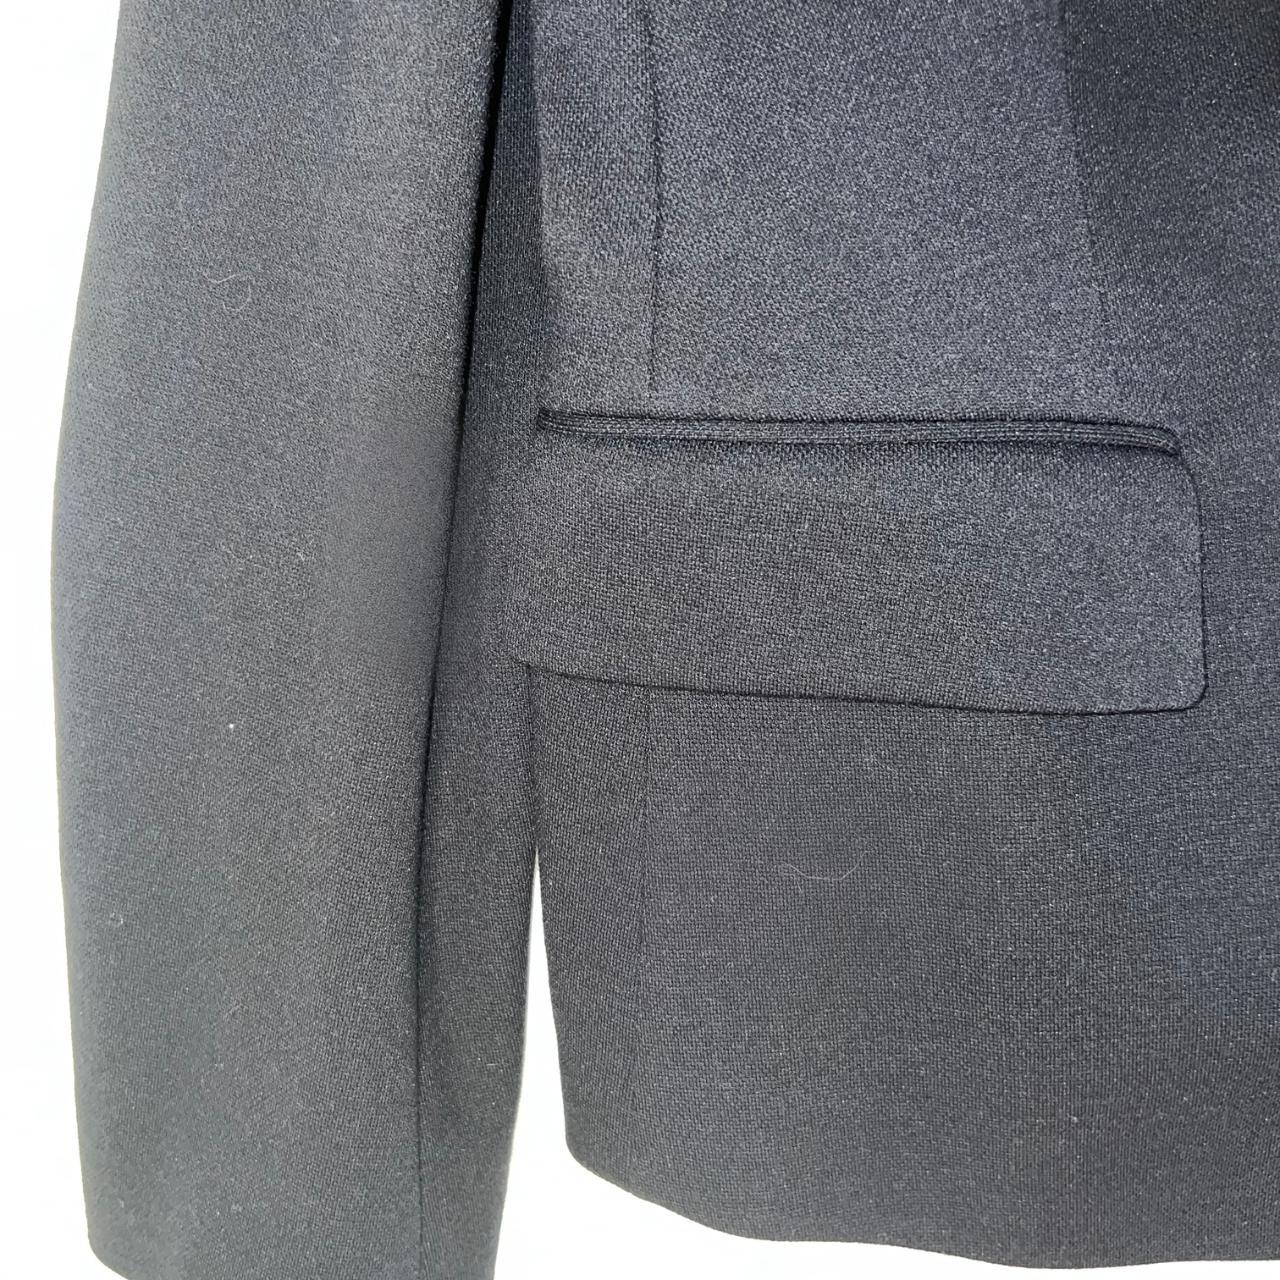 This authentic Hugo Boss Suit Jacket Blazer is a... - Depop